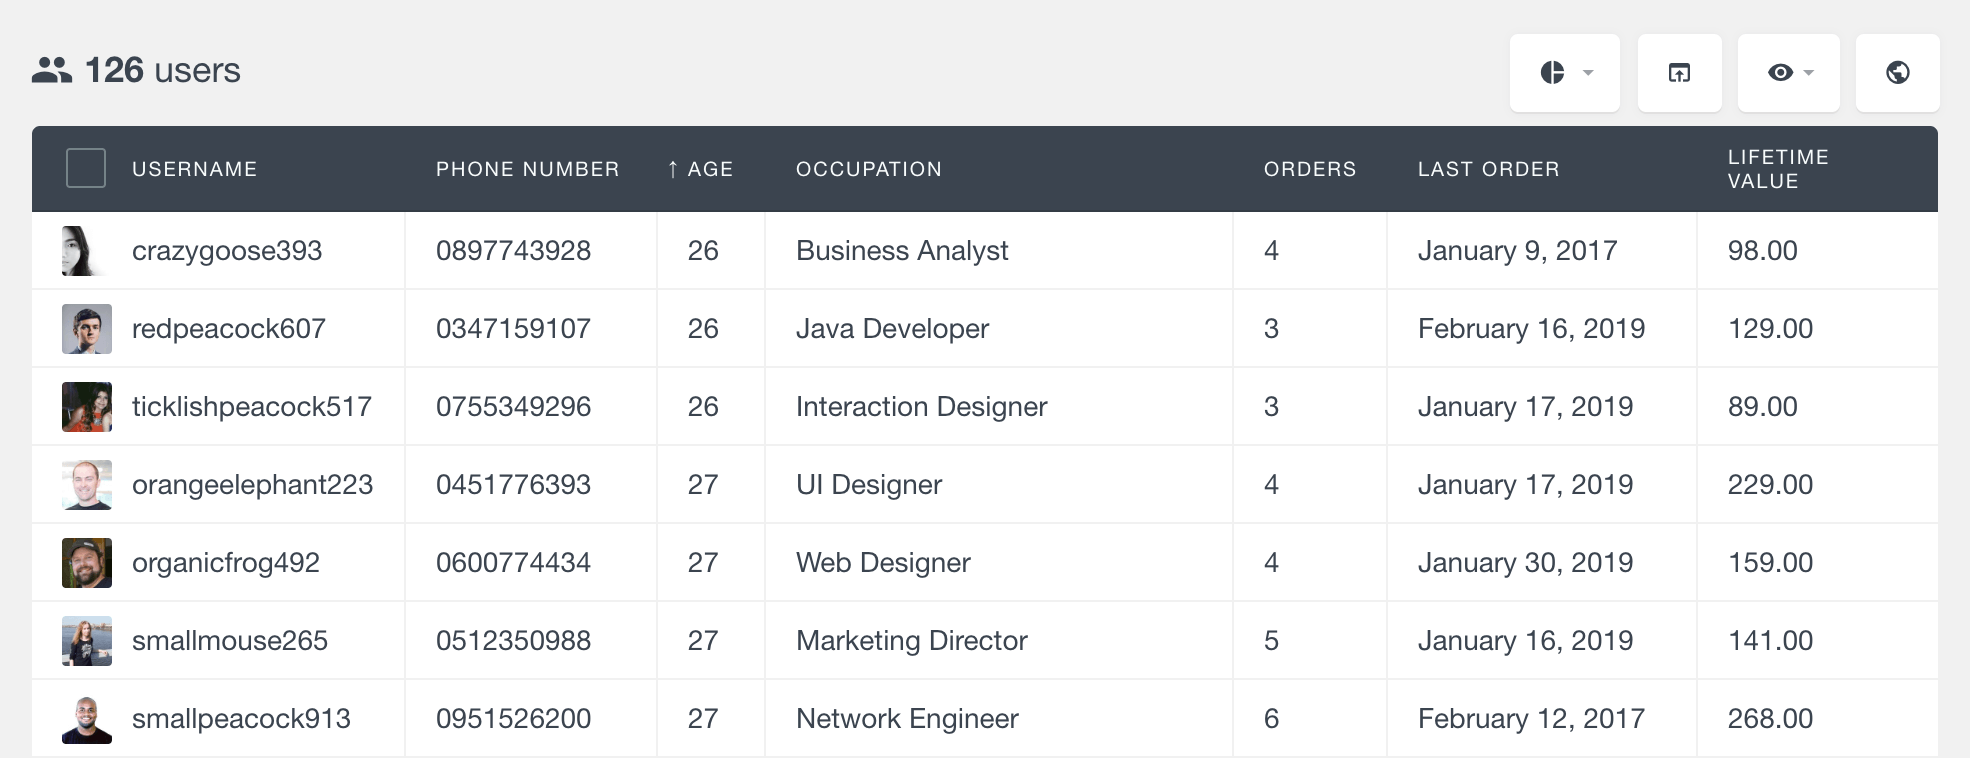 Display WooCommerce customer profile fields in table